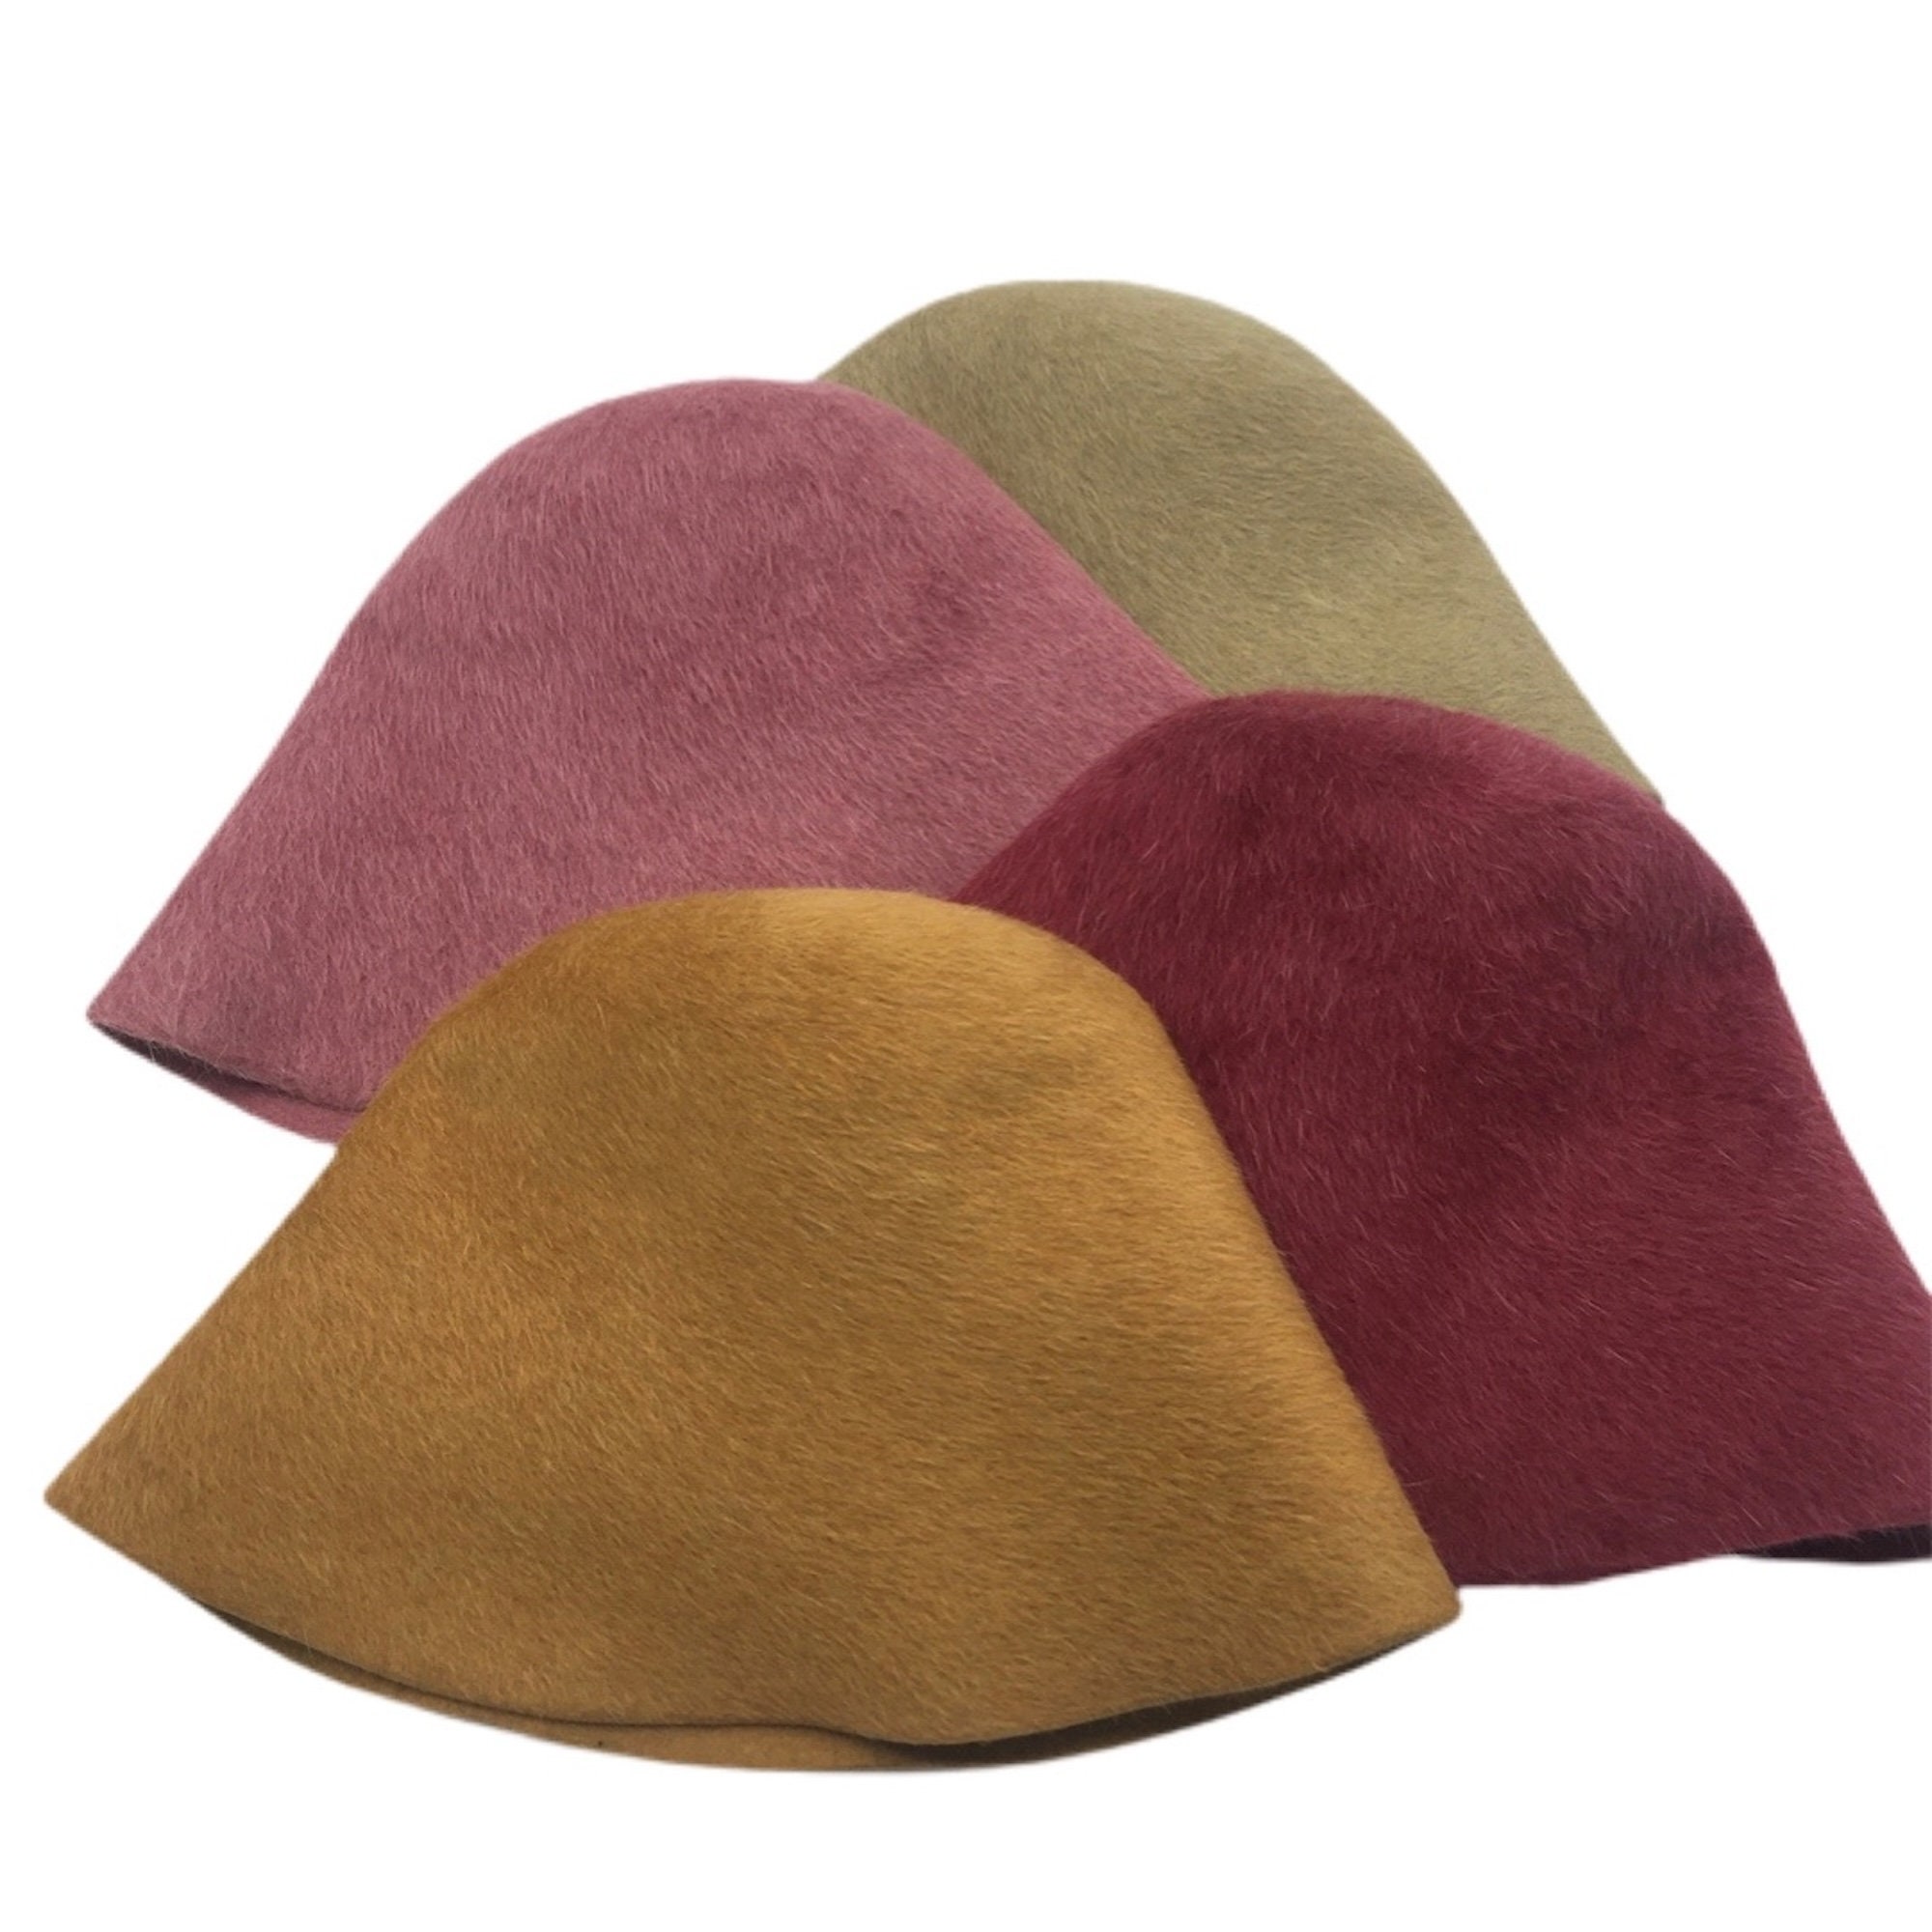 Basketweave Printed Fur Felt Cone Hood Hat Body for Millinery & Hat Making